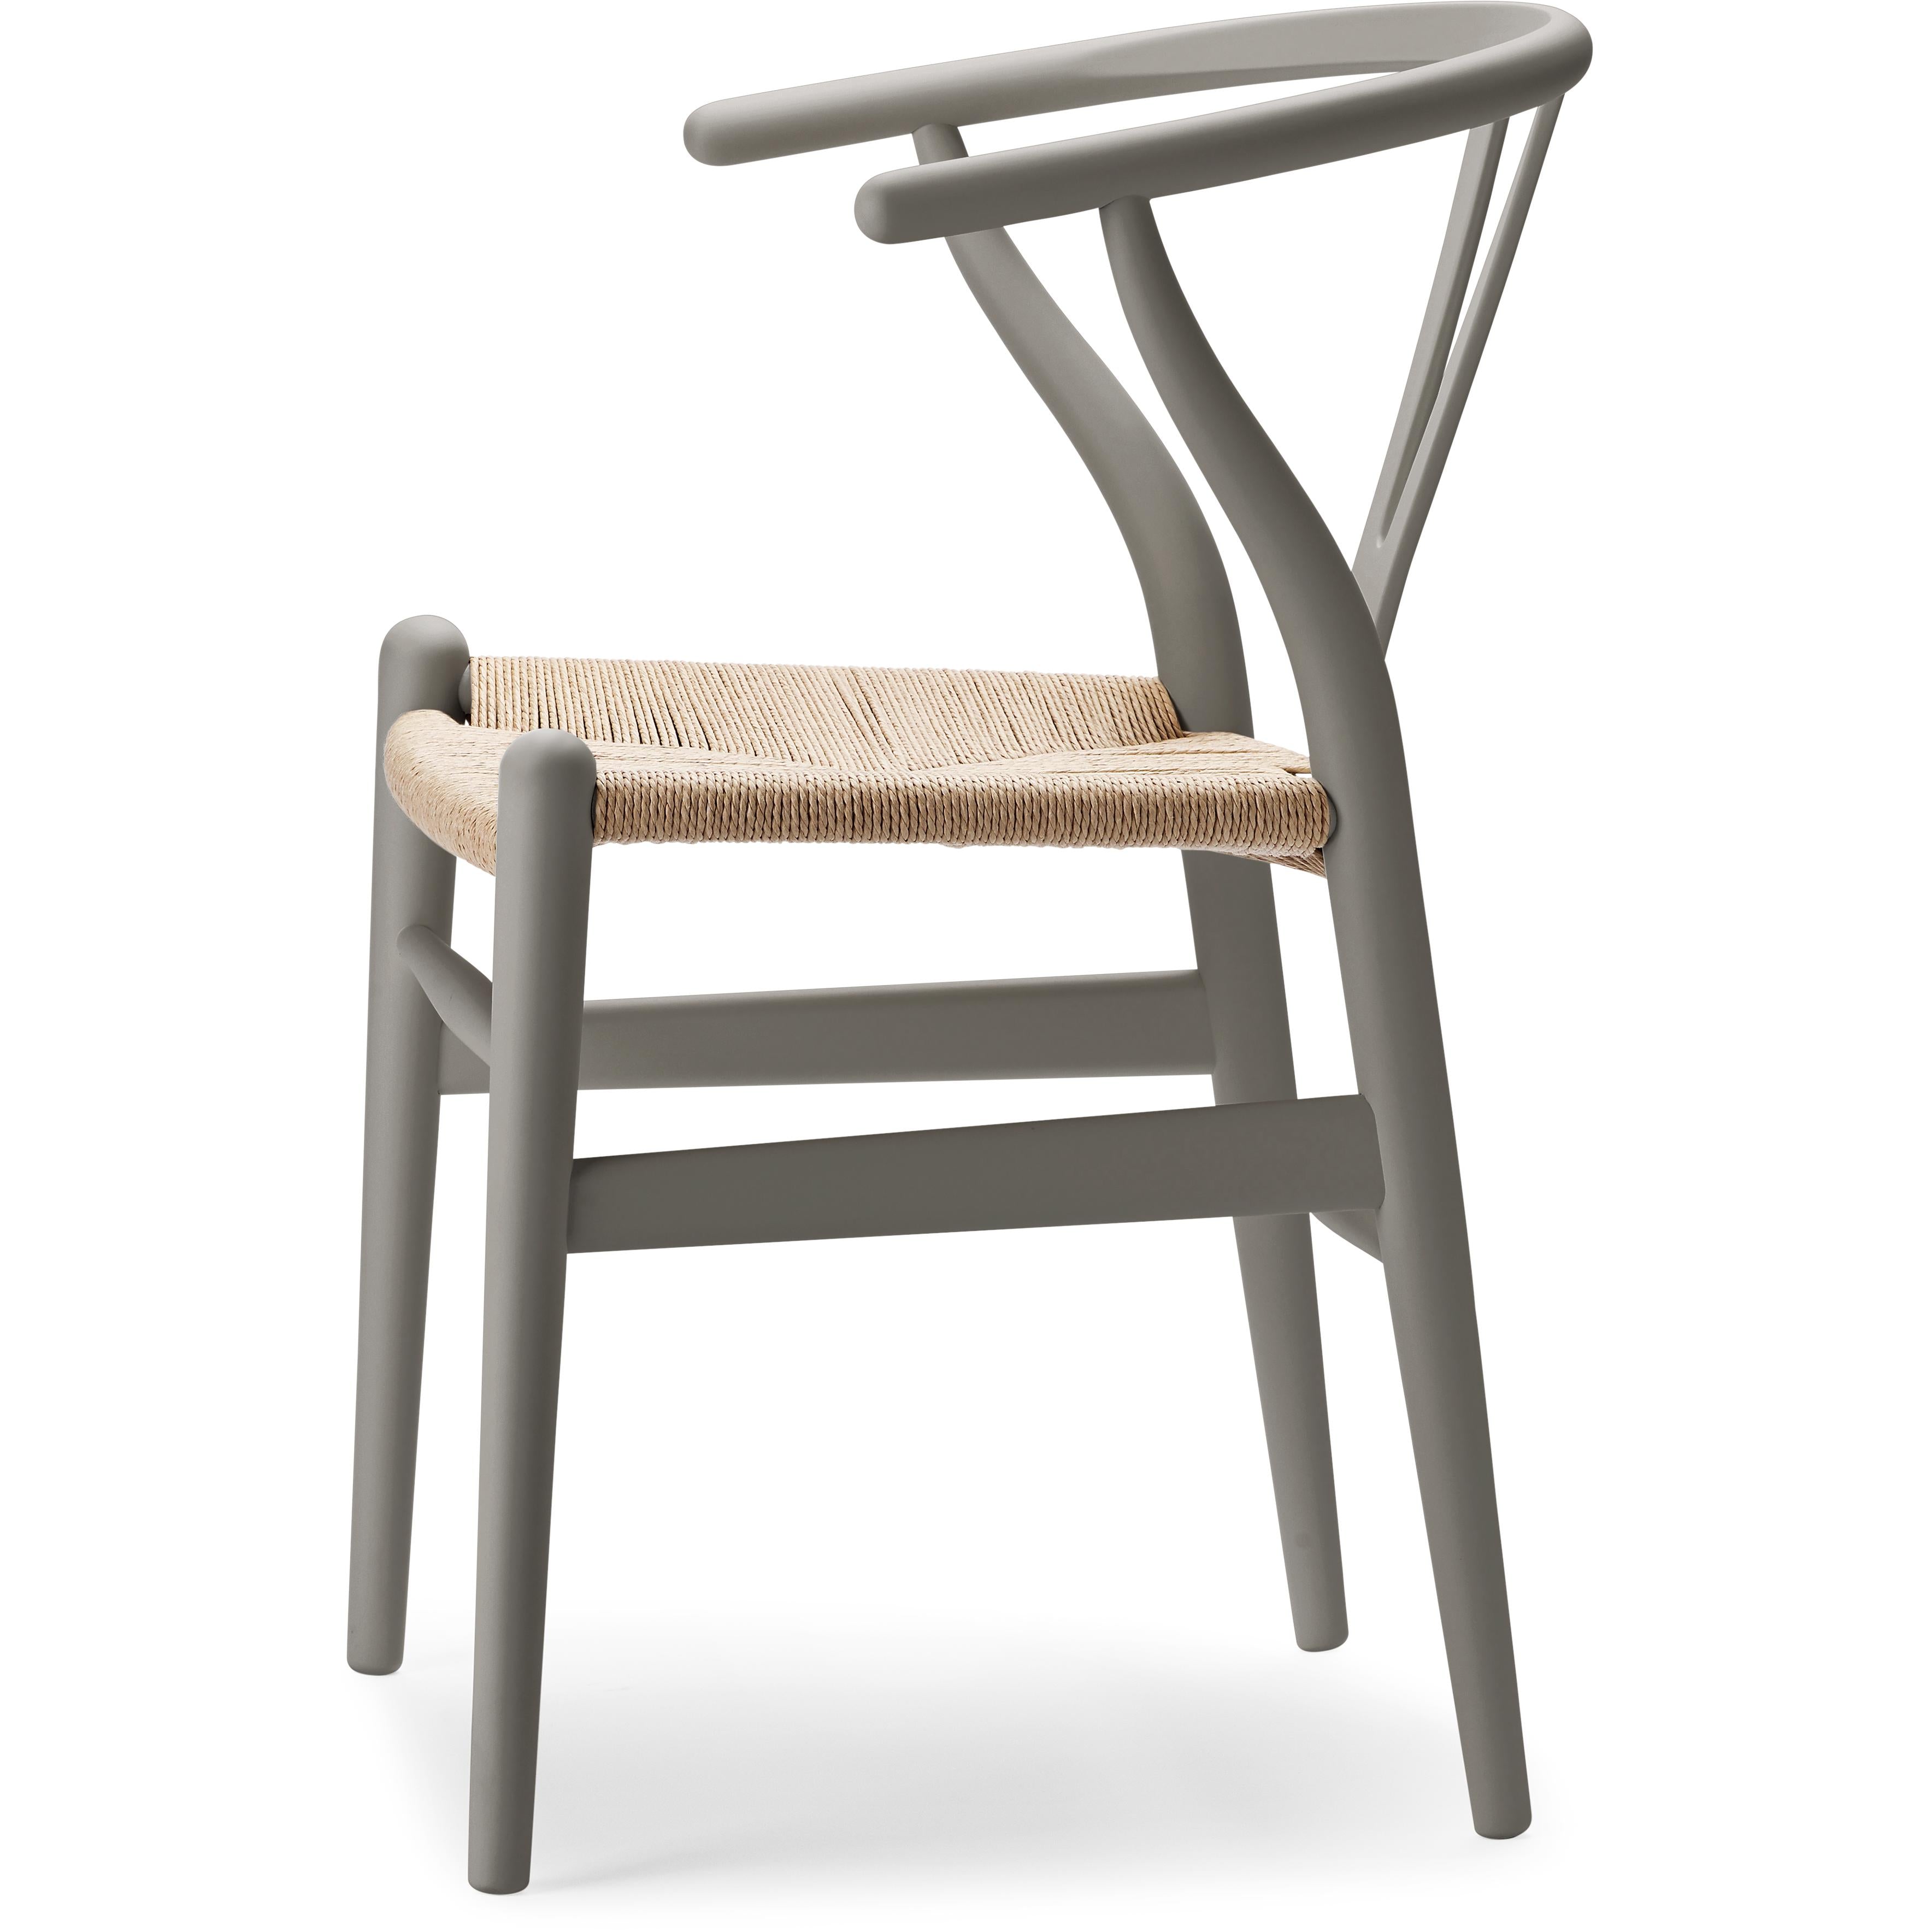 Carl Hansen CH24 Soft Y -Chair Beech, Clay - Special Edition